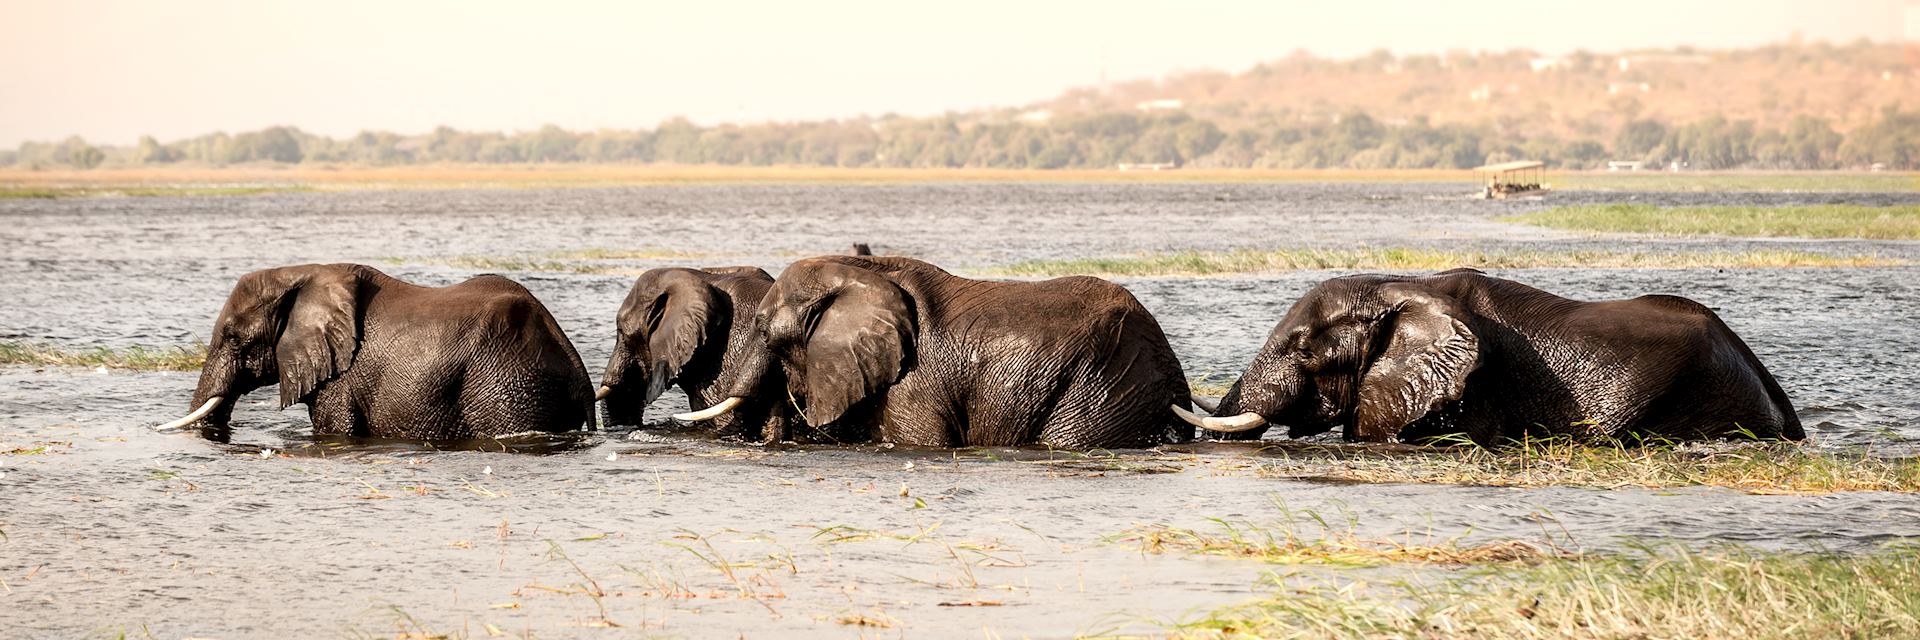 Elephant crossing the Chobe River